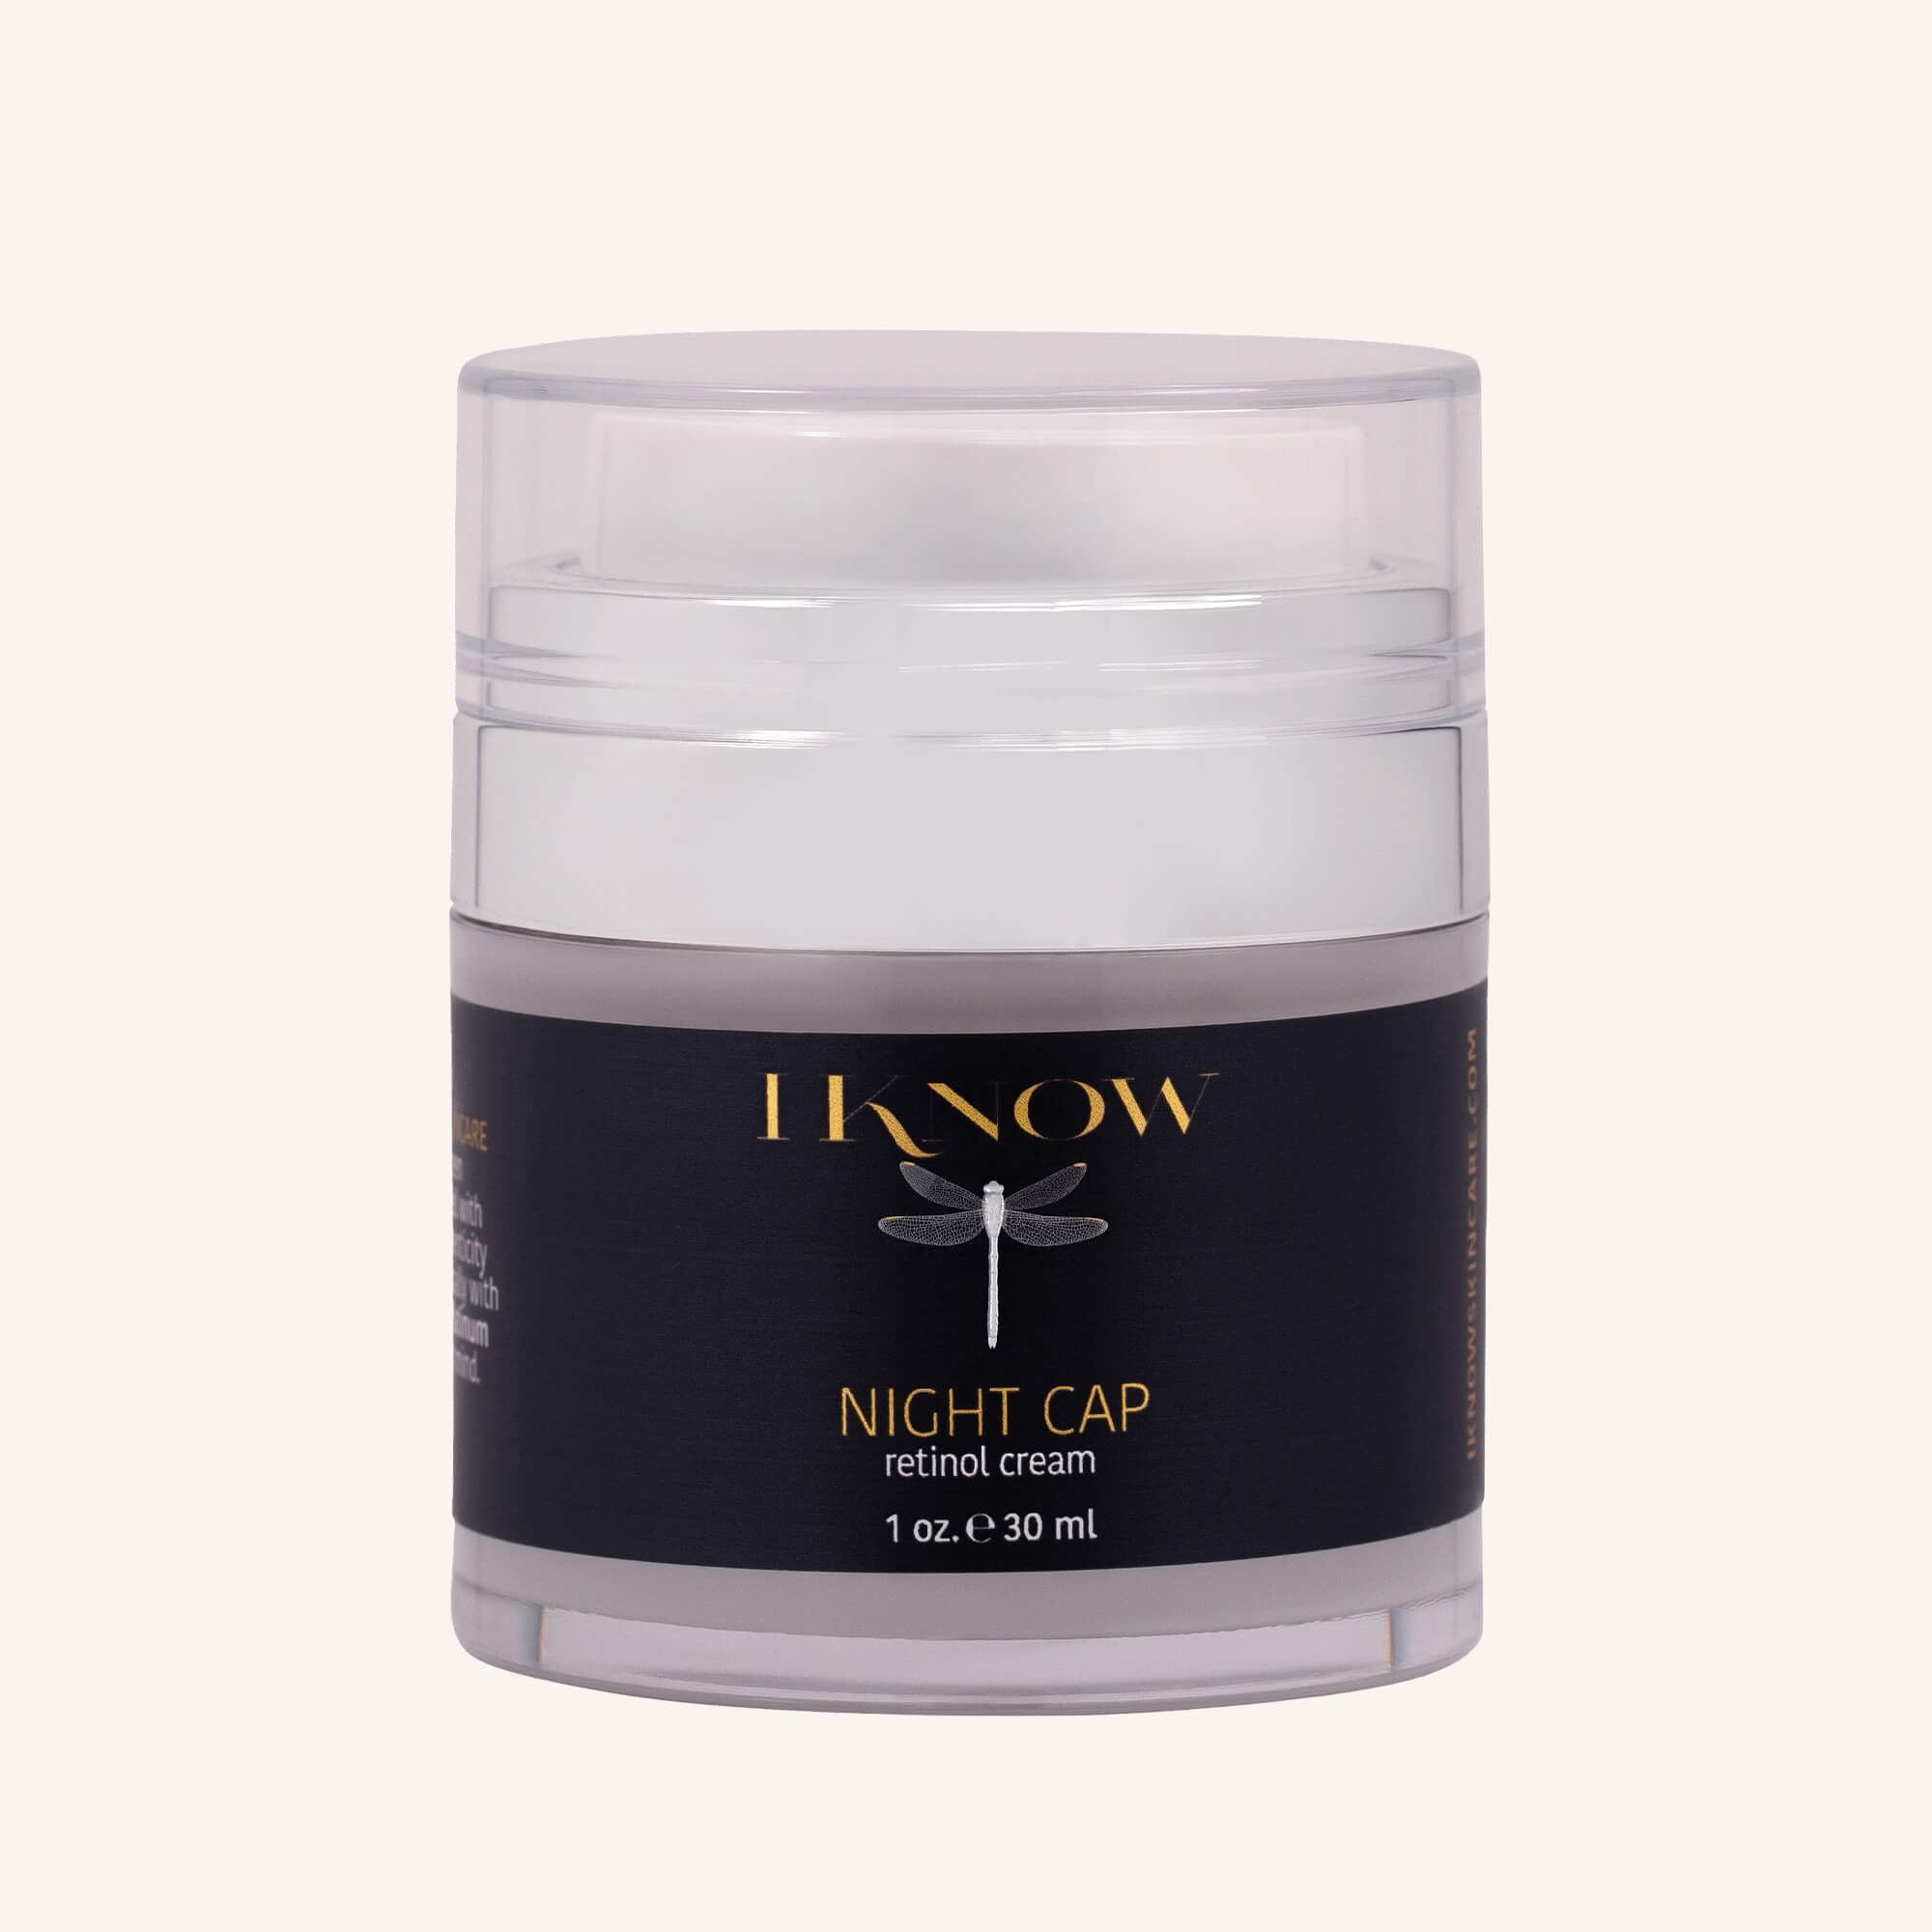 IKNOW Night Cap Retinol Moisturizing Cream softens wrinkles, brightens skin and boosts elasticity